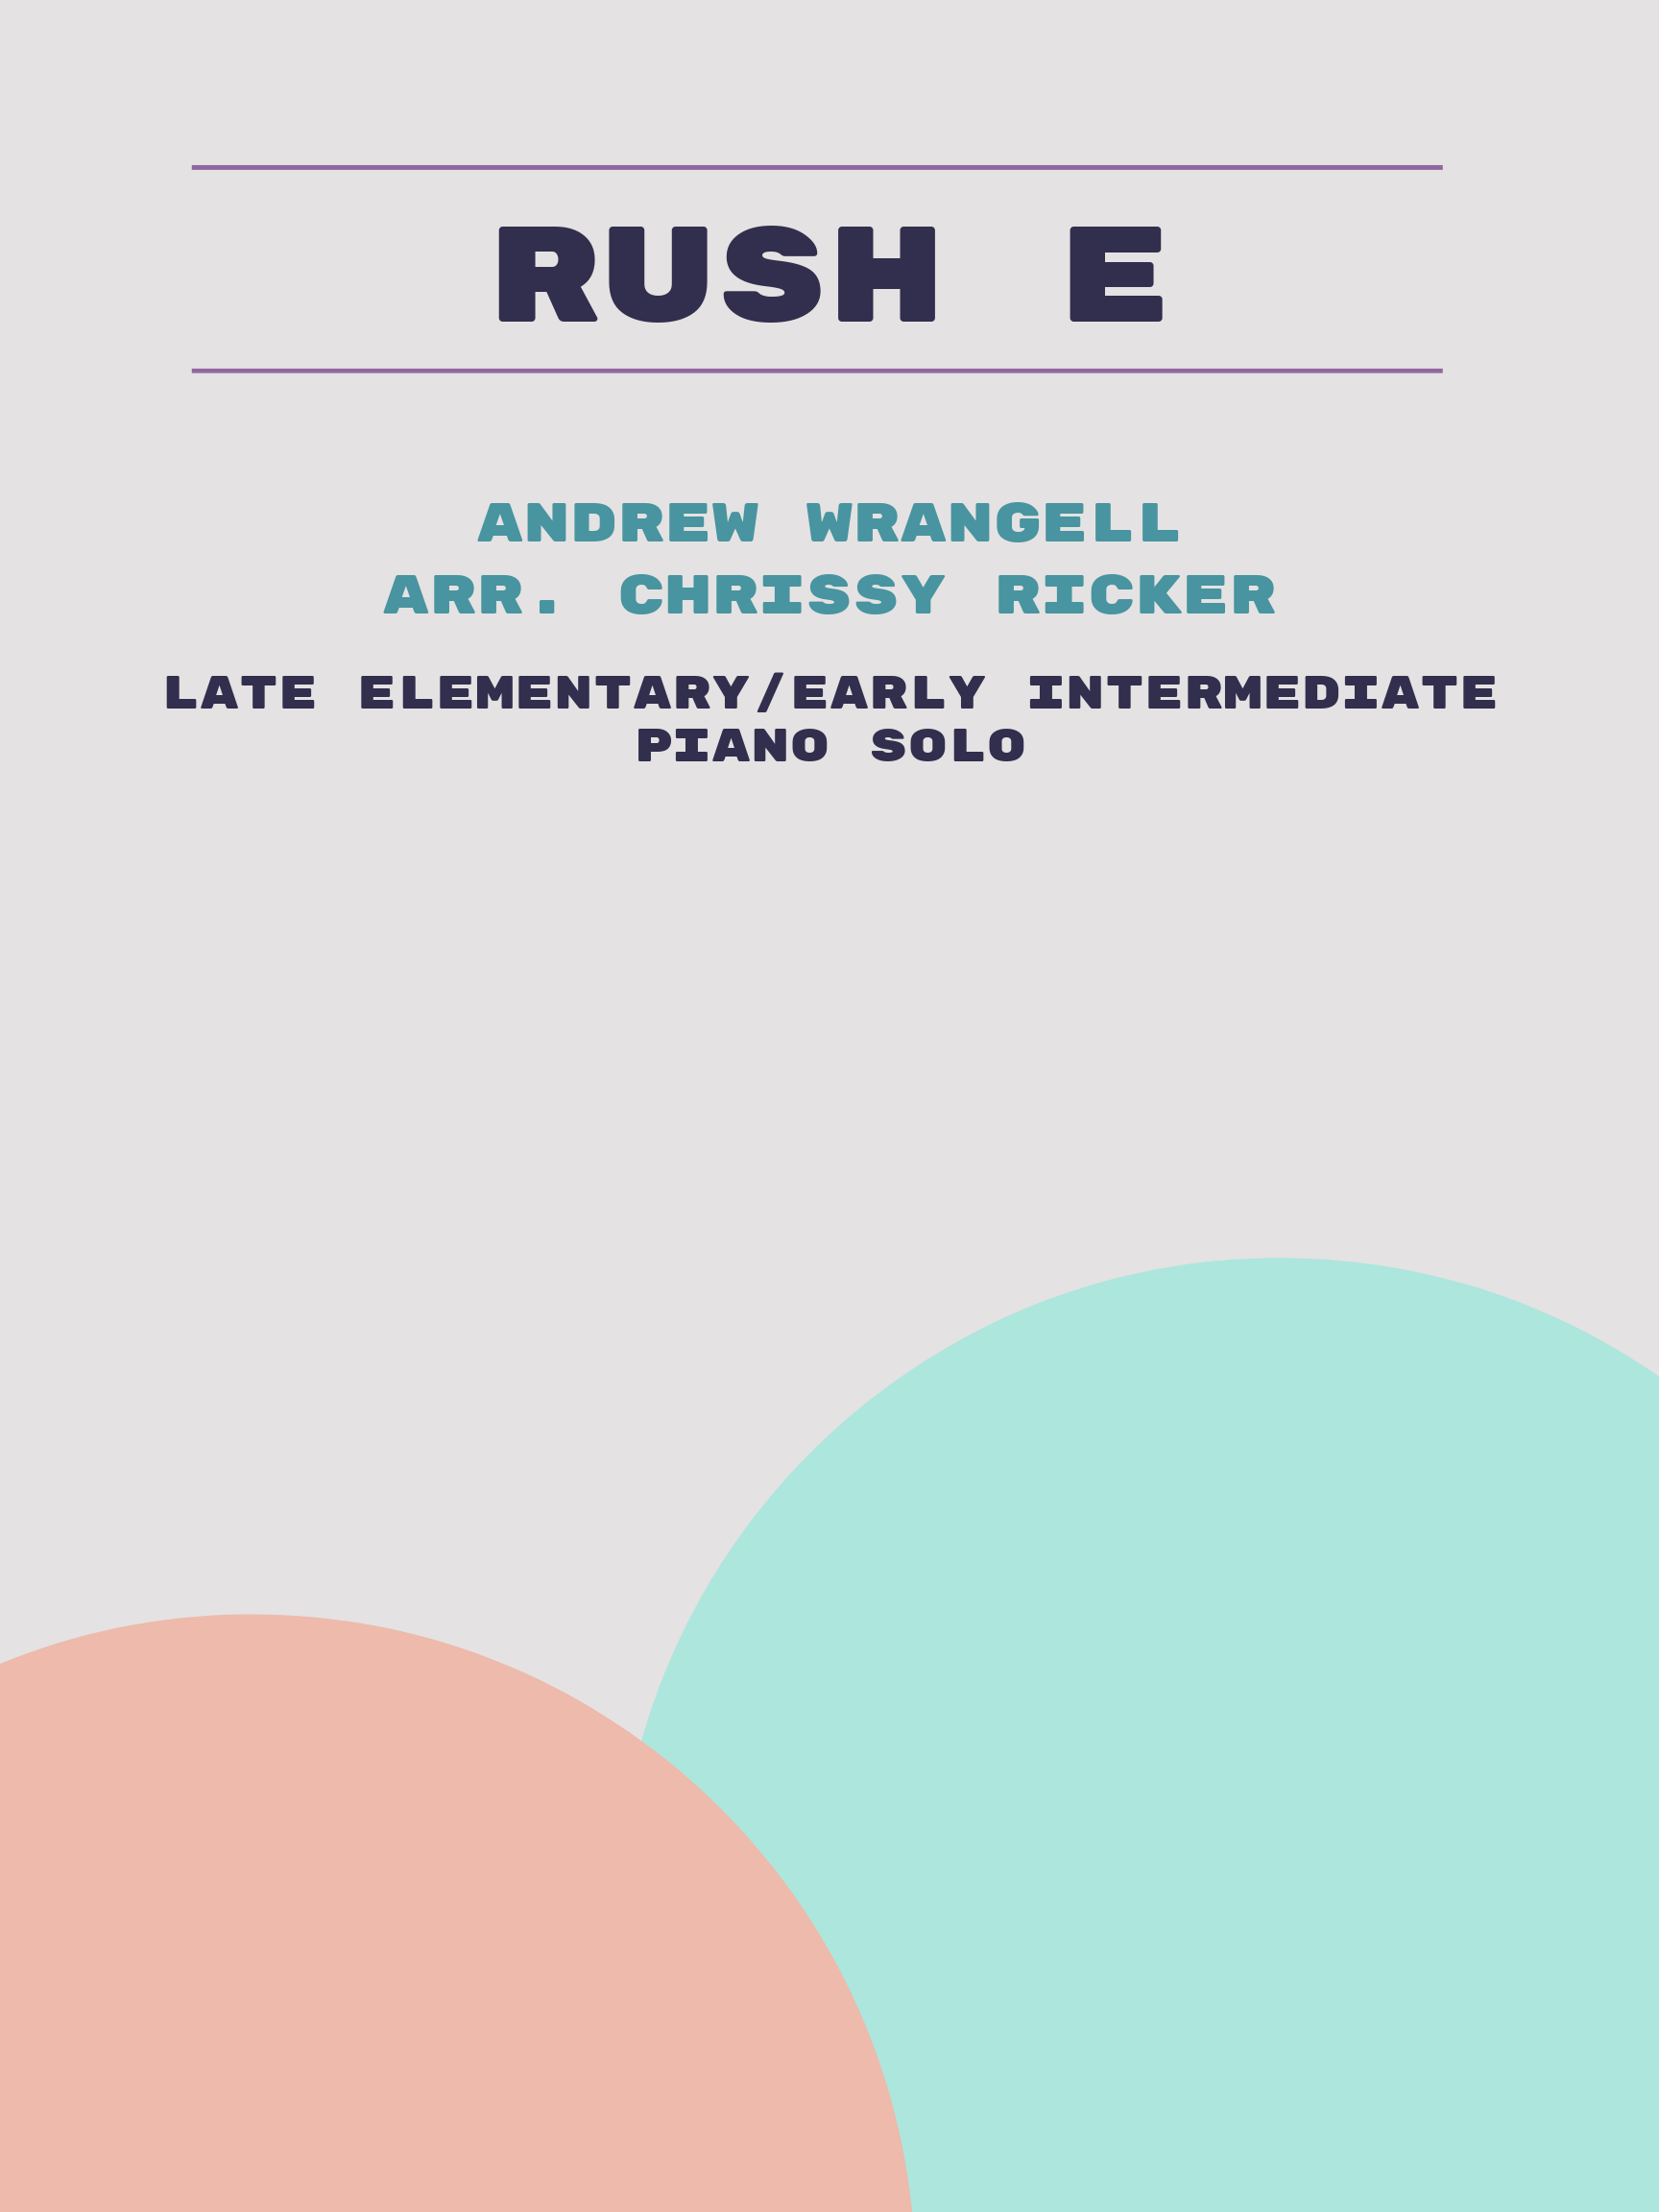 Rush E by Andrew Wrangell